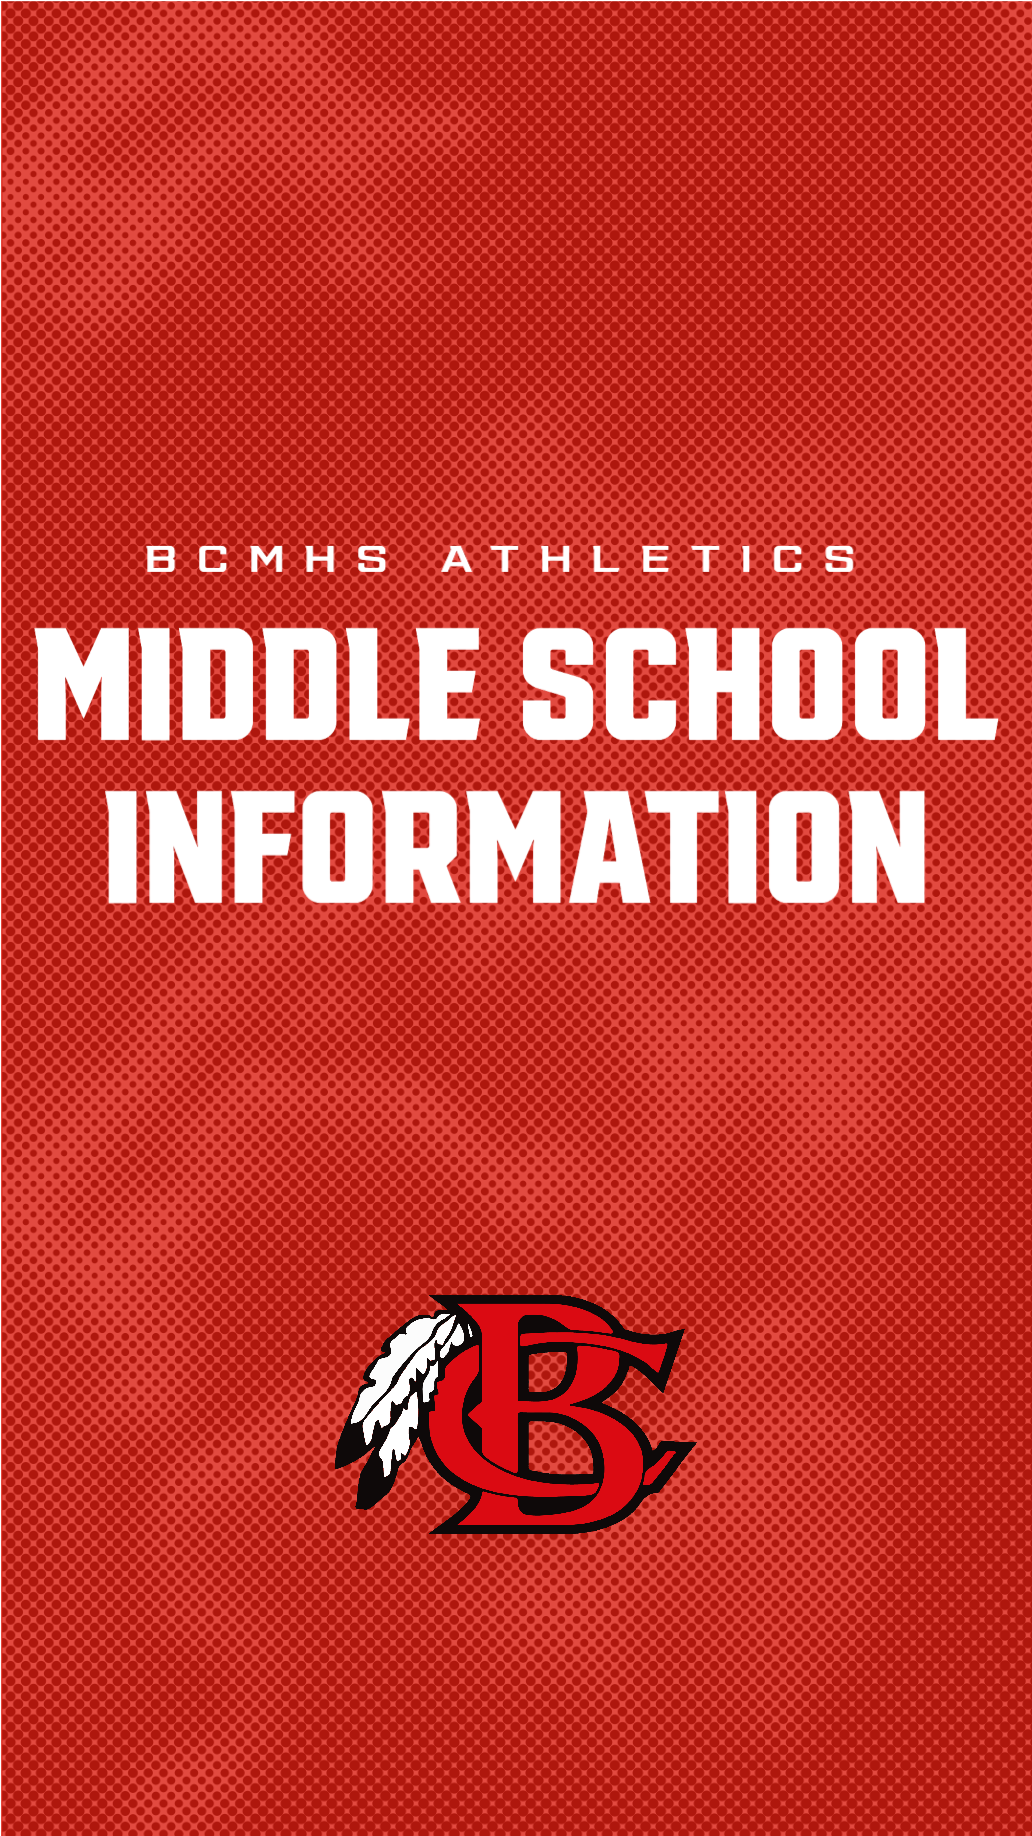 Middle School Athletic Information Side Banner